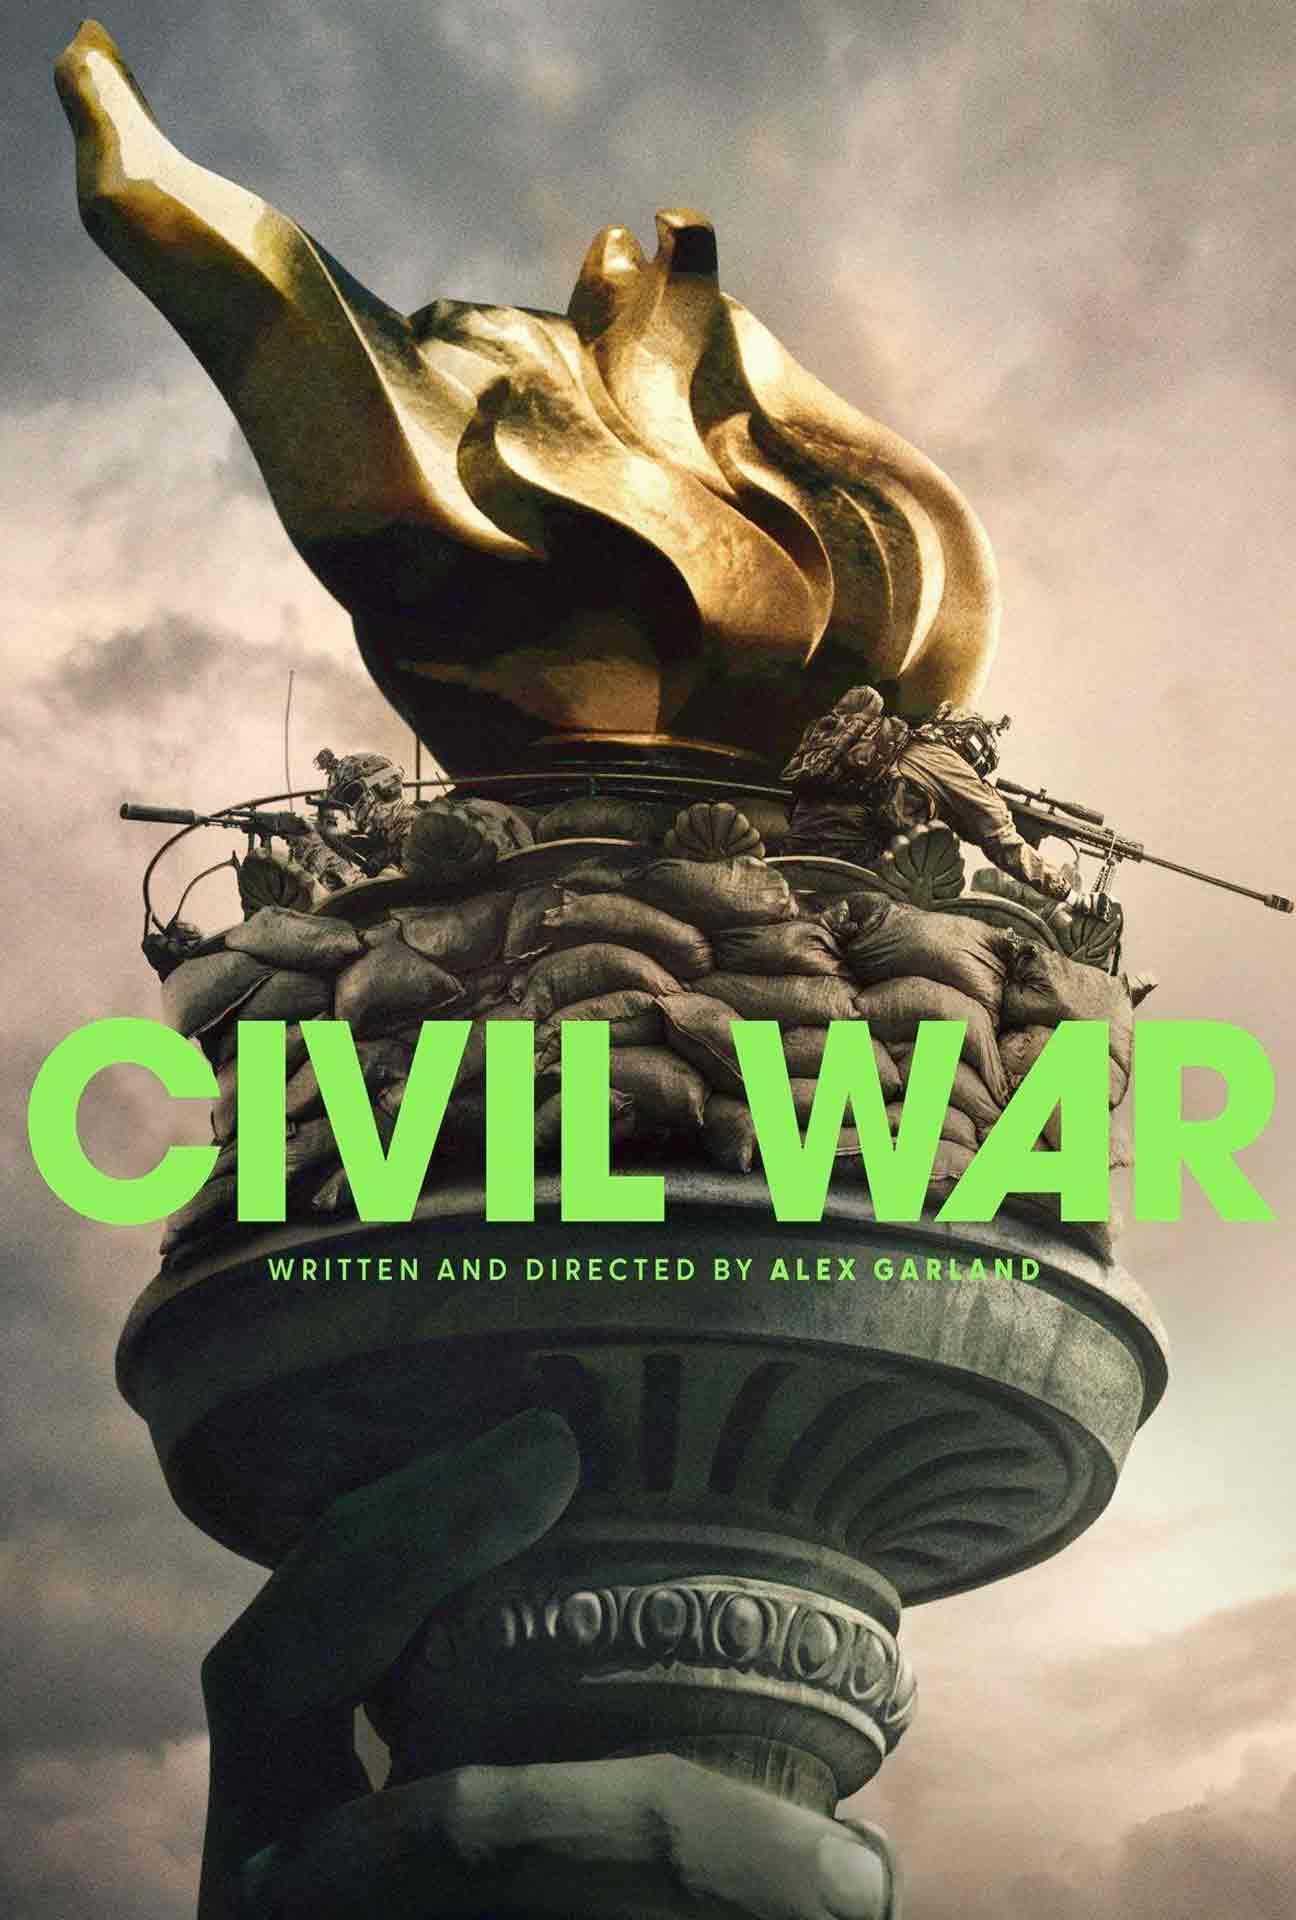 Movie Poster for Civil War